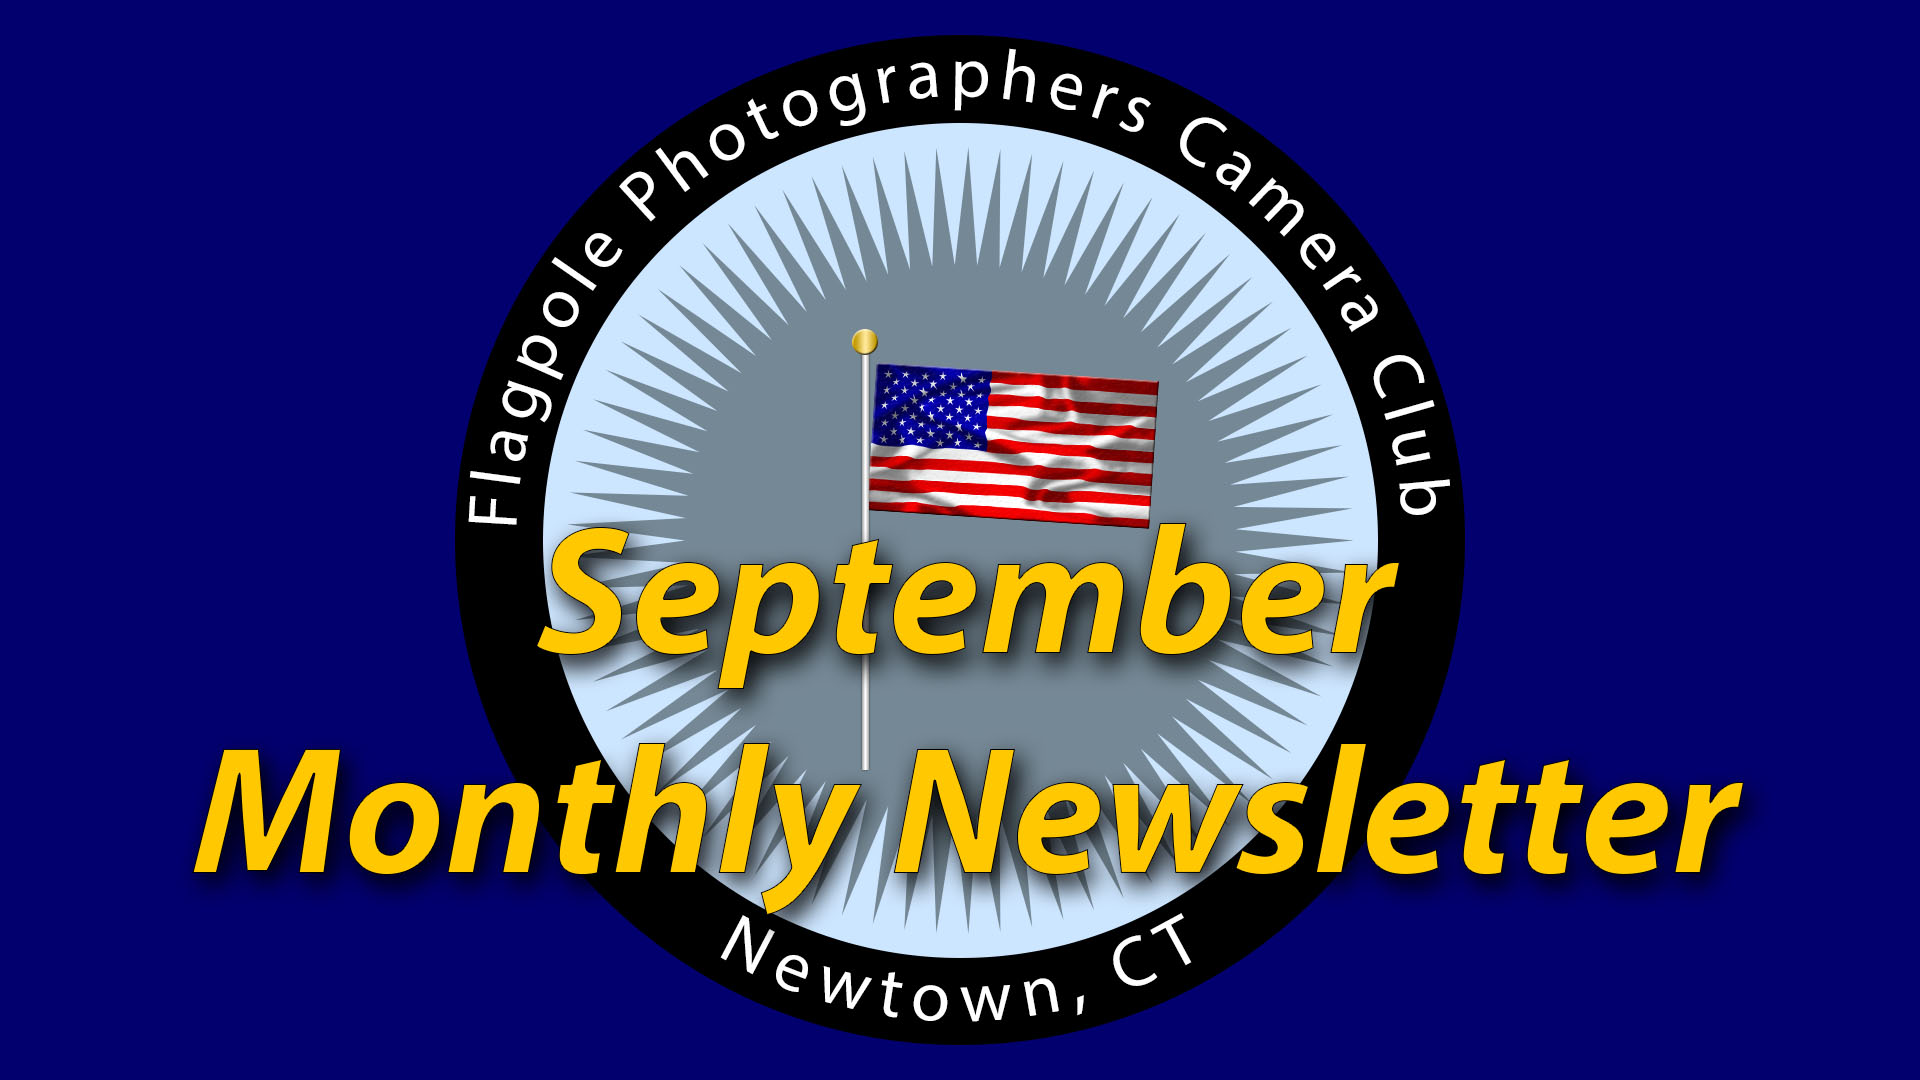 Flagpole Photographers September 2020 Newsletter